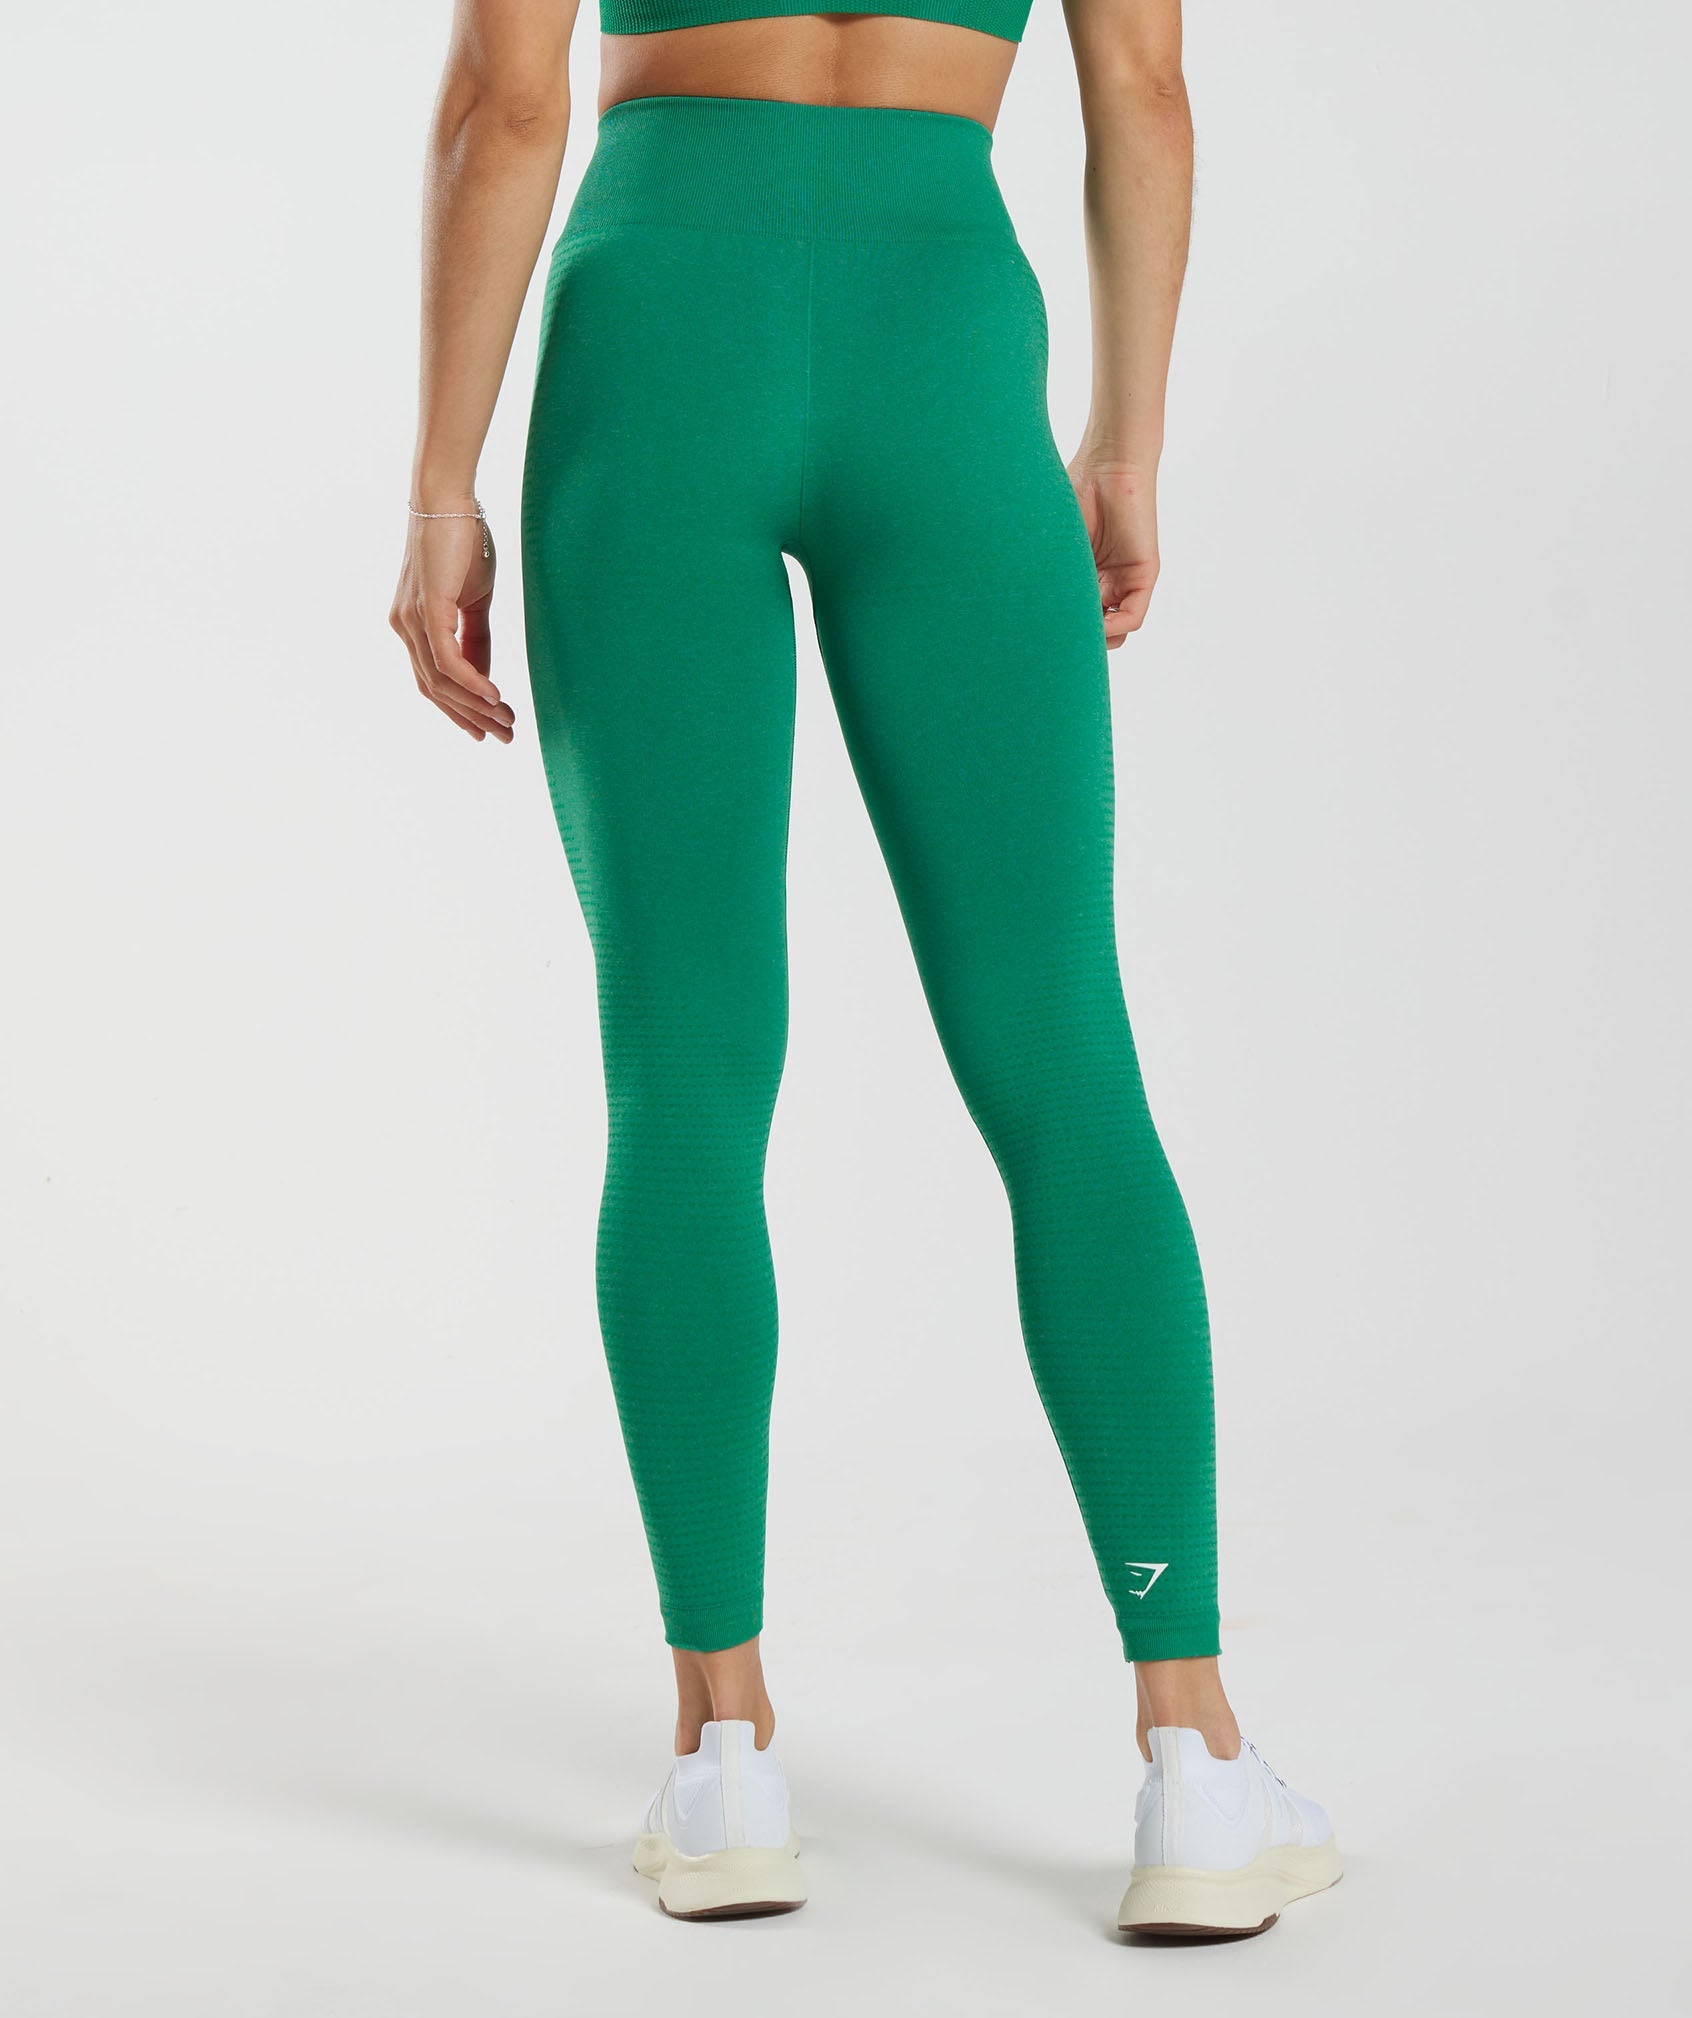 Gymshark Vital Seamless 2.0 Shorts - Bright Green Marl